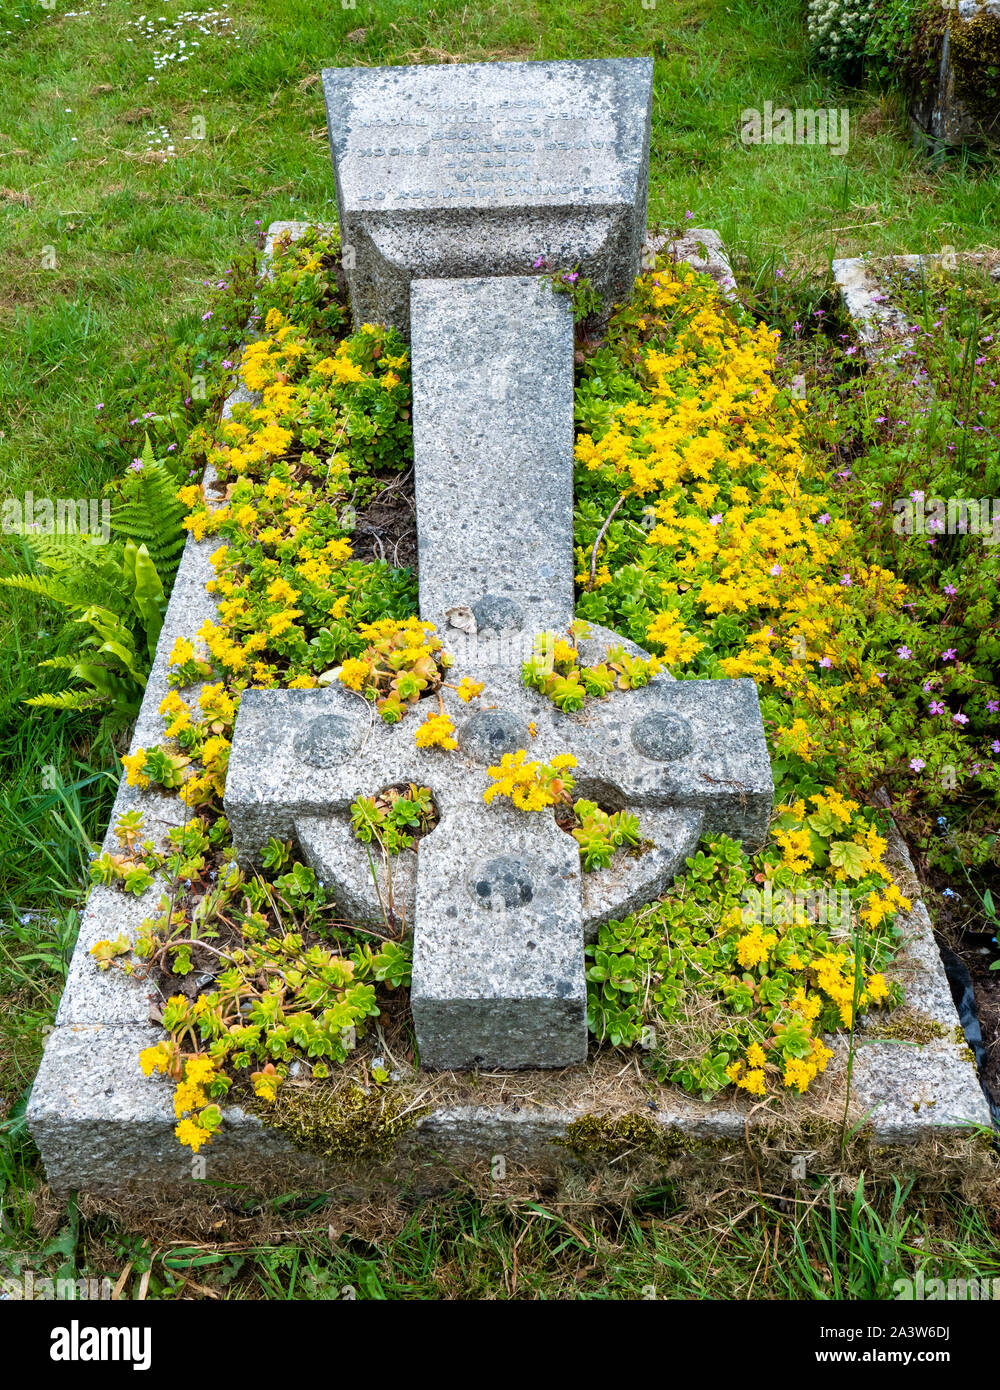 Fallen memorial cross on grave planted with yellow sedum at St Michael's parish church flower graveyard Dundry village near Bristol in Somerset UK Stock Photo